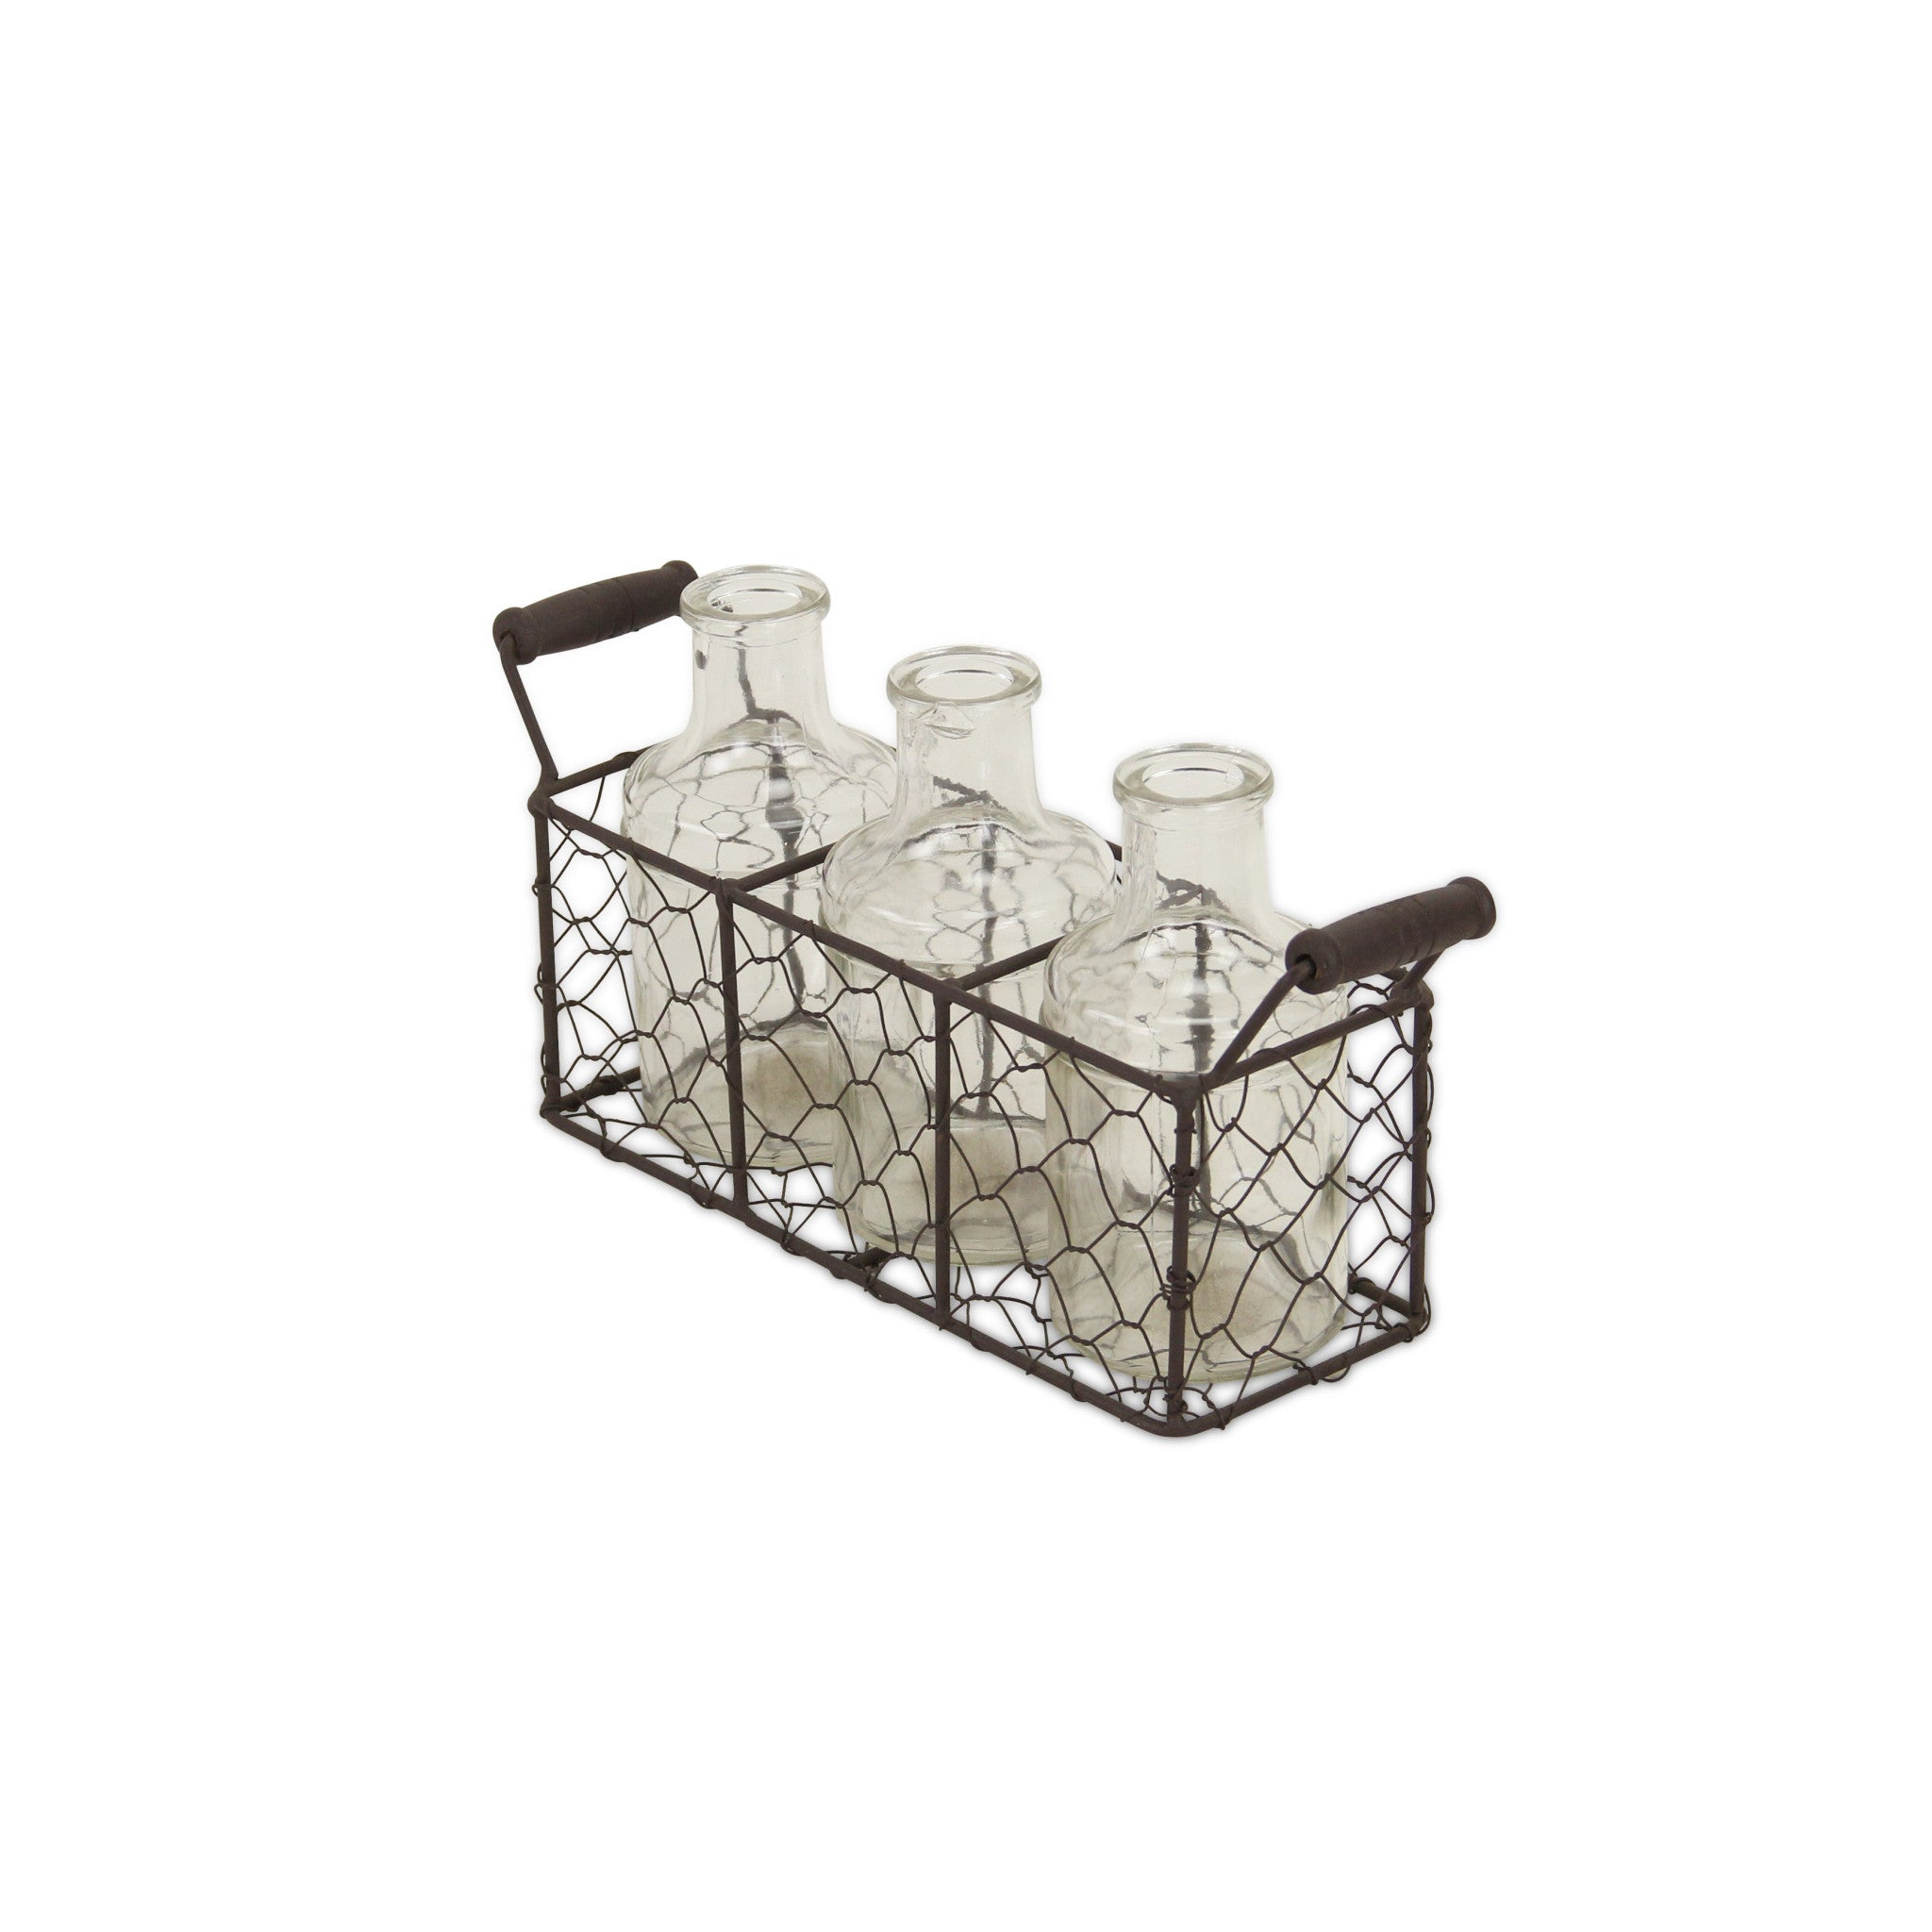 8.5" Set of Three Glass Bottles in Brown Wire Basket